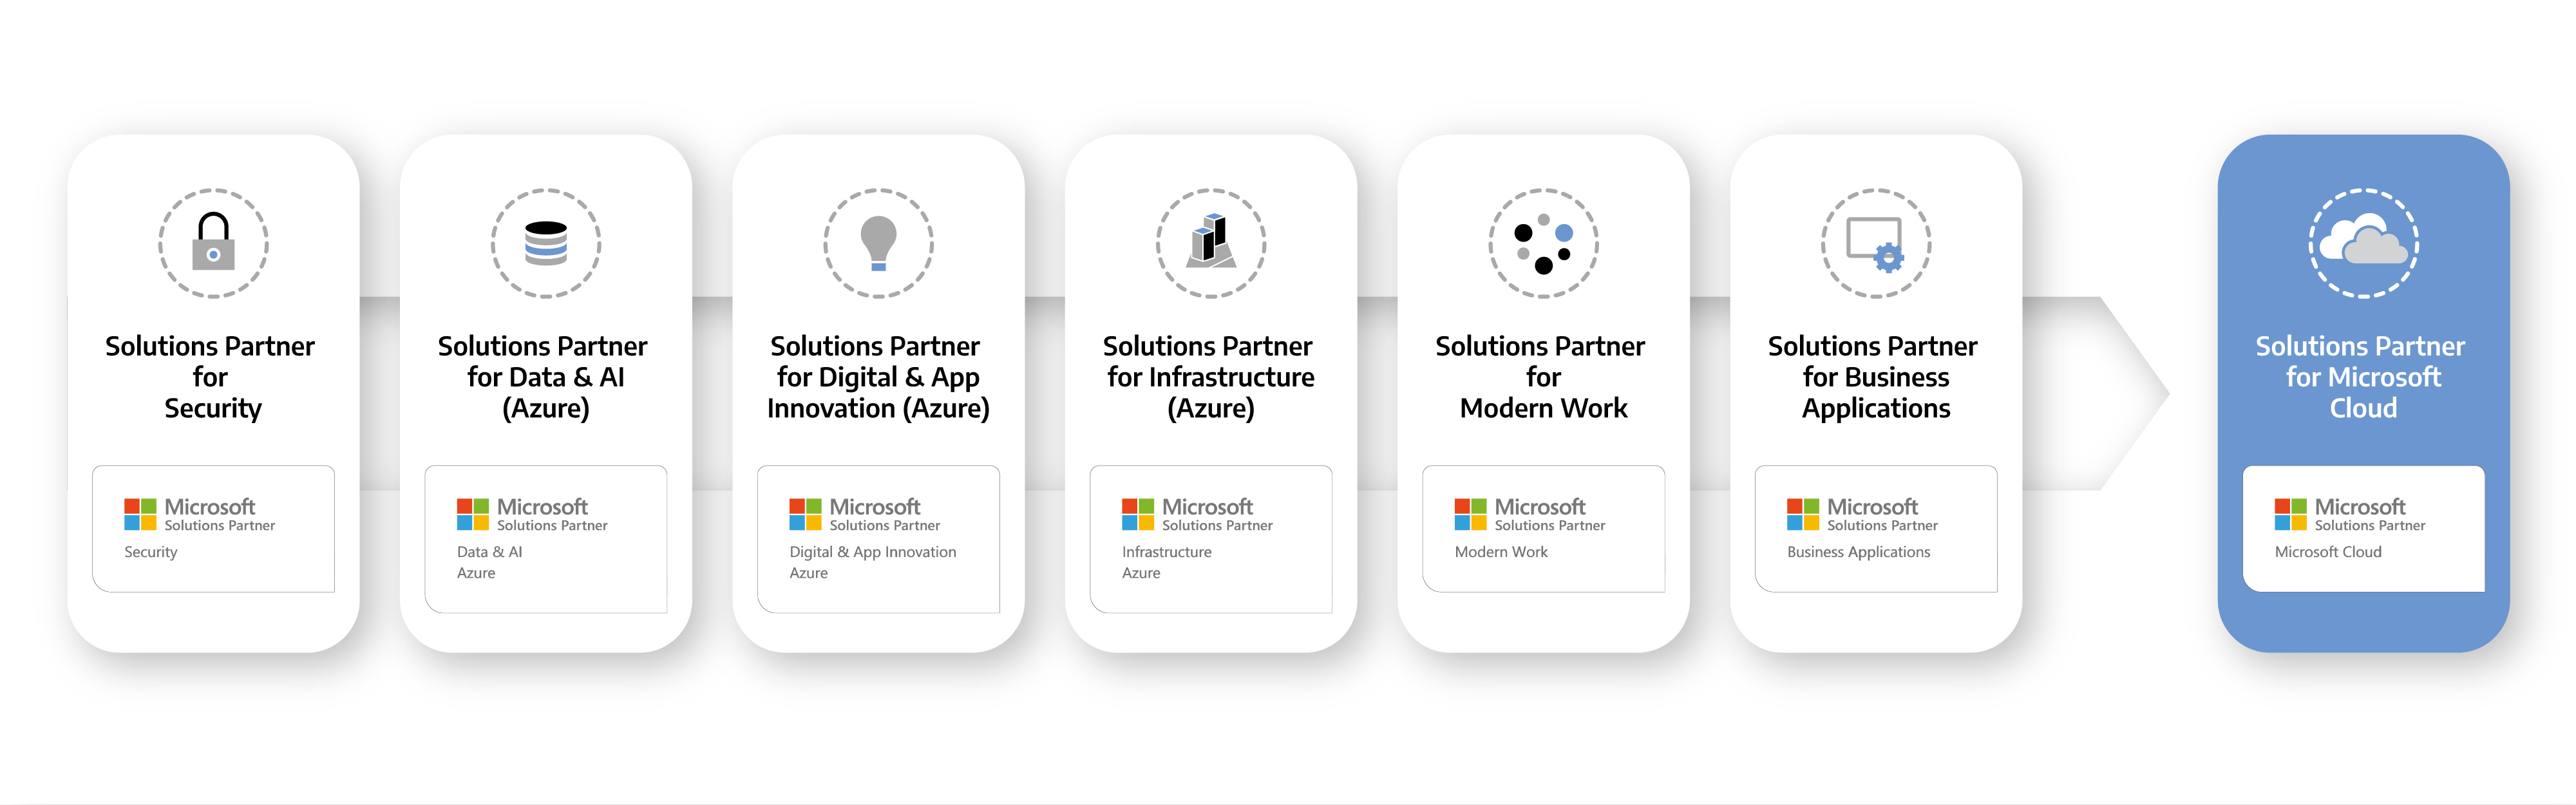 Microsoft Cloud Solutions Partner graphic